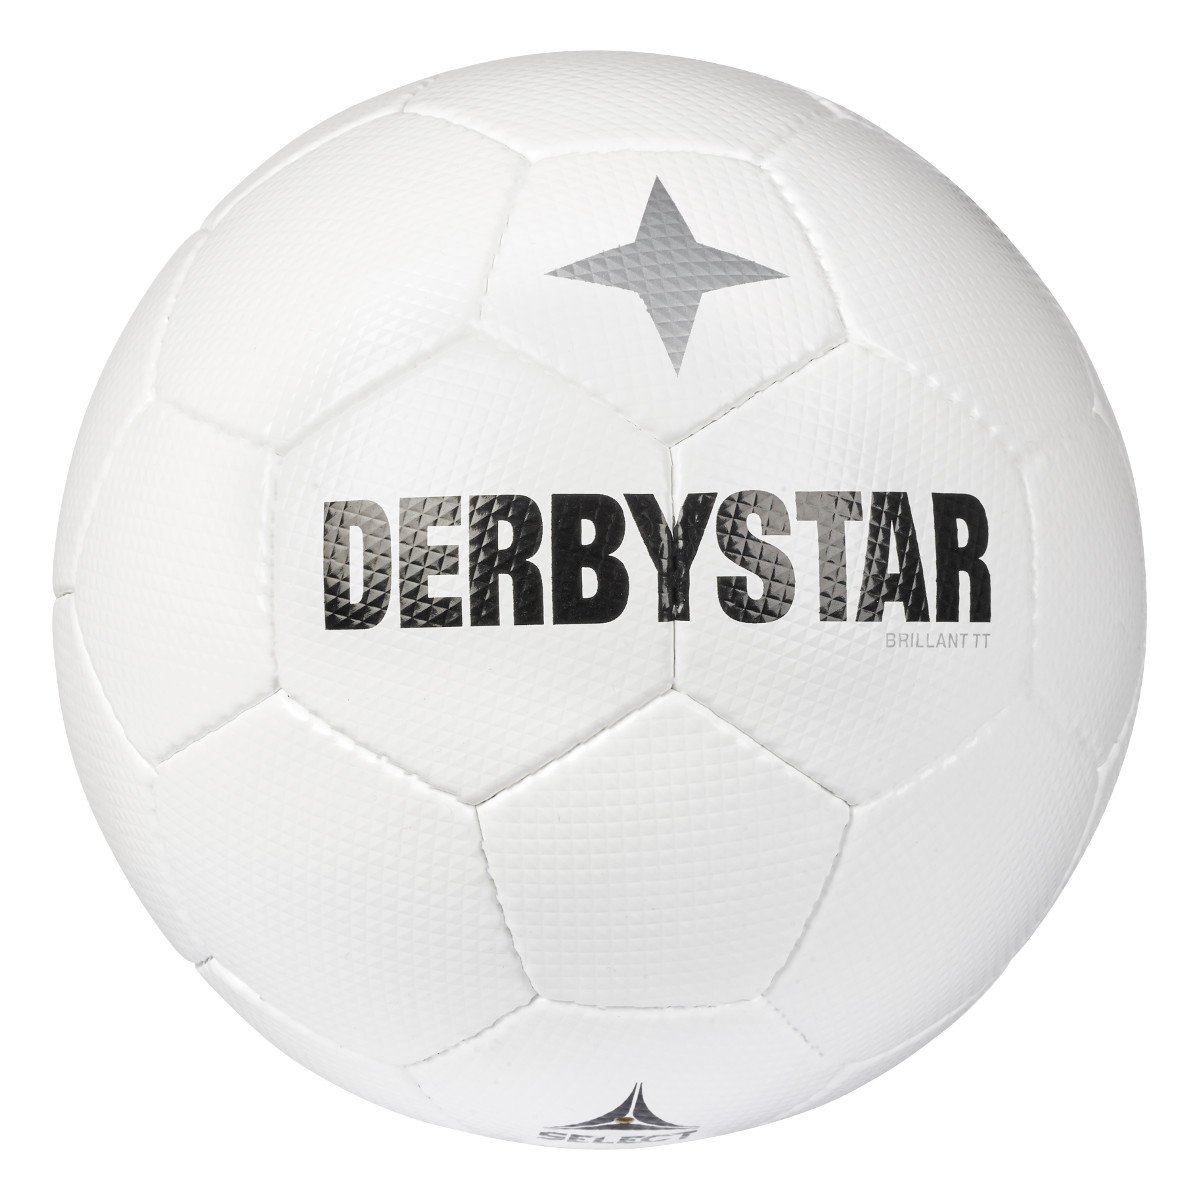 Derbystar v22 weiß Brillant TT Fußball, Classic